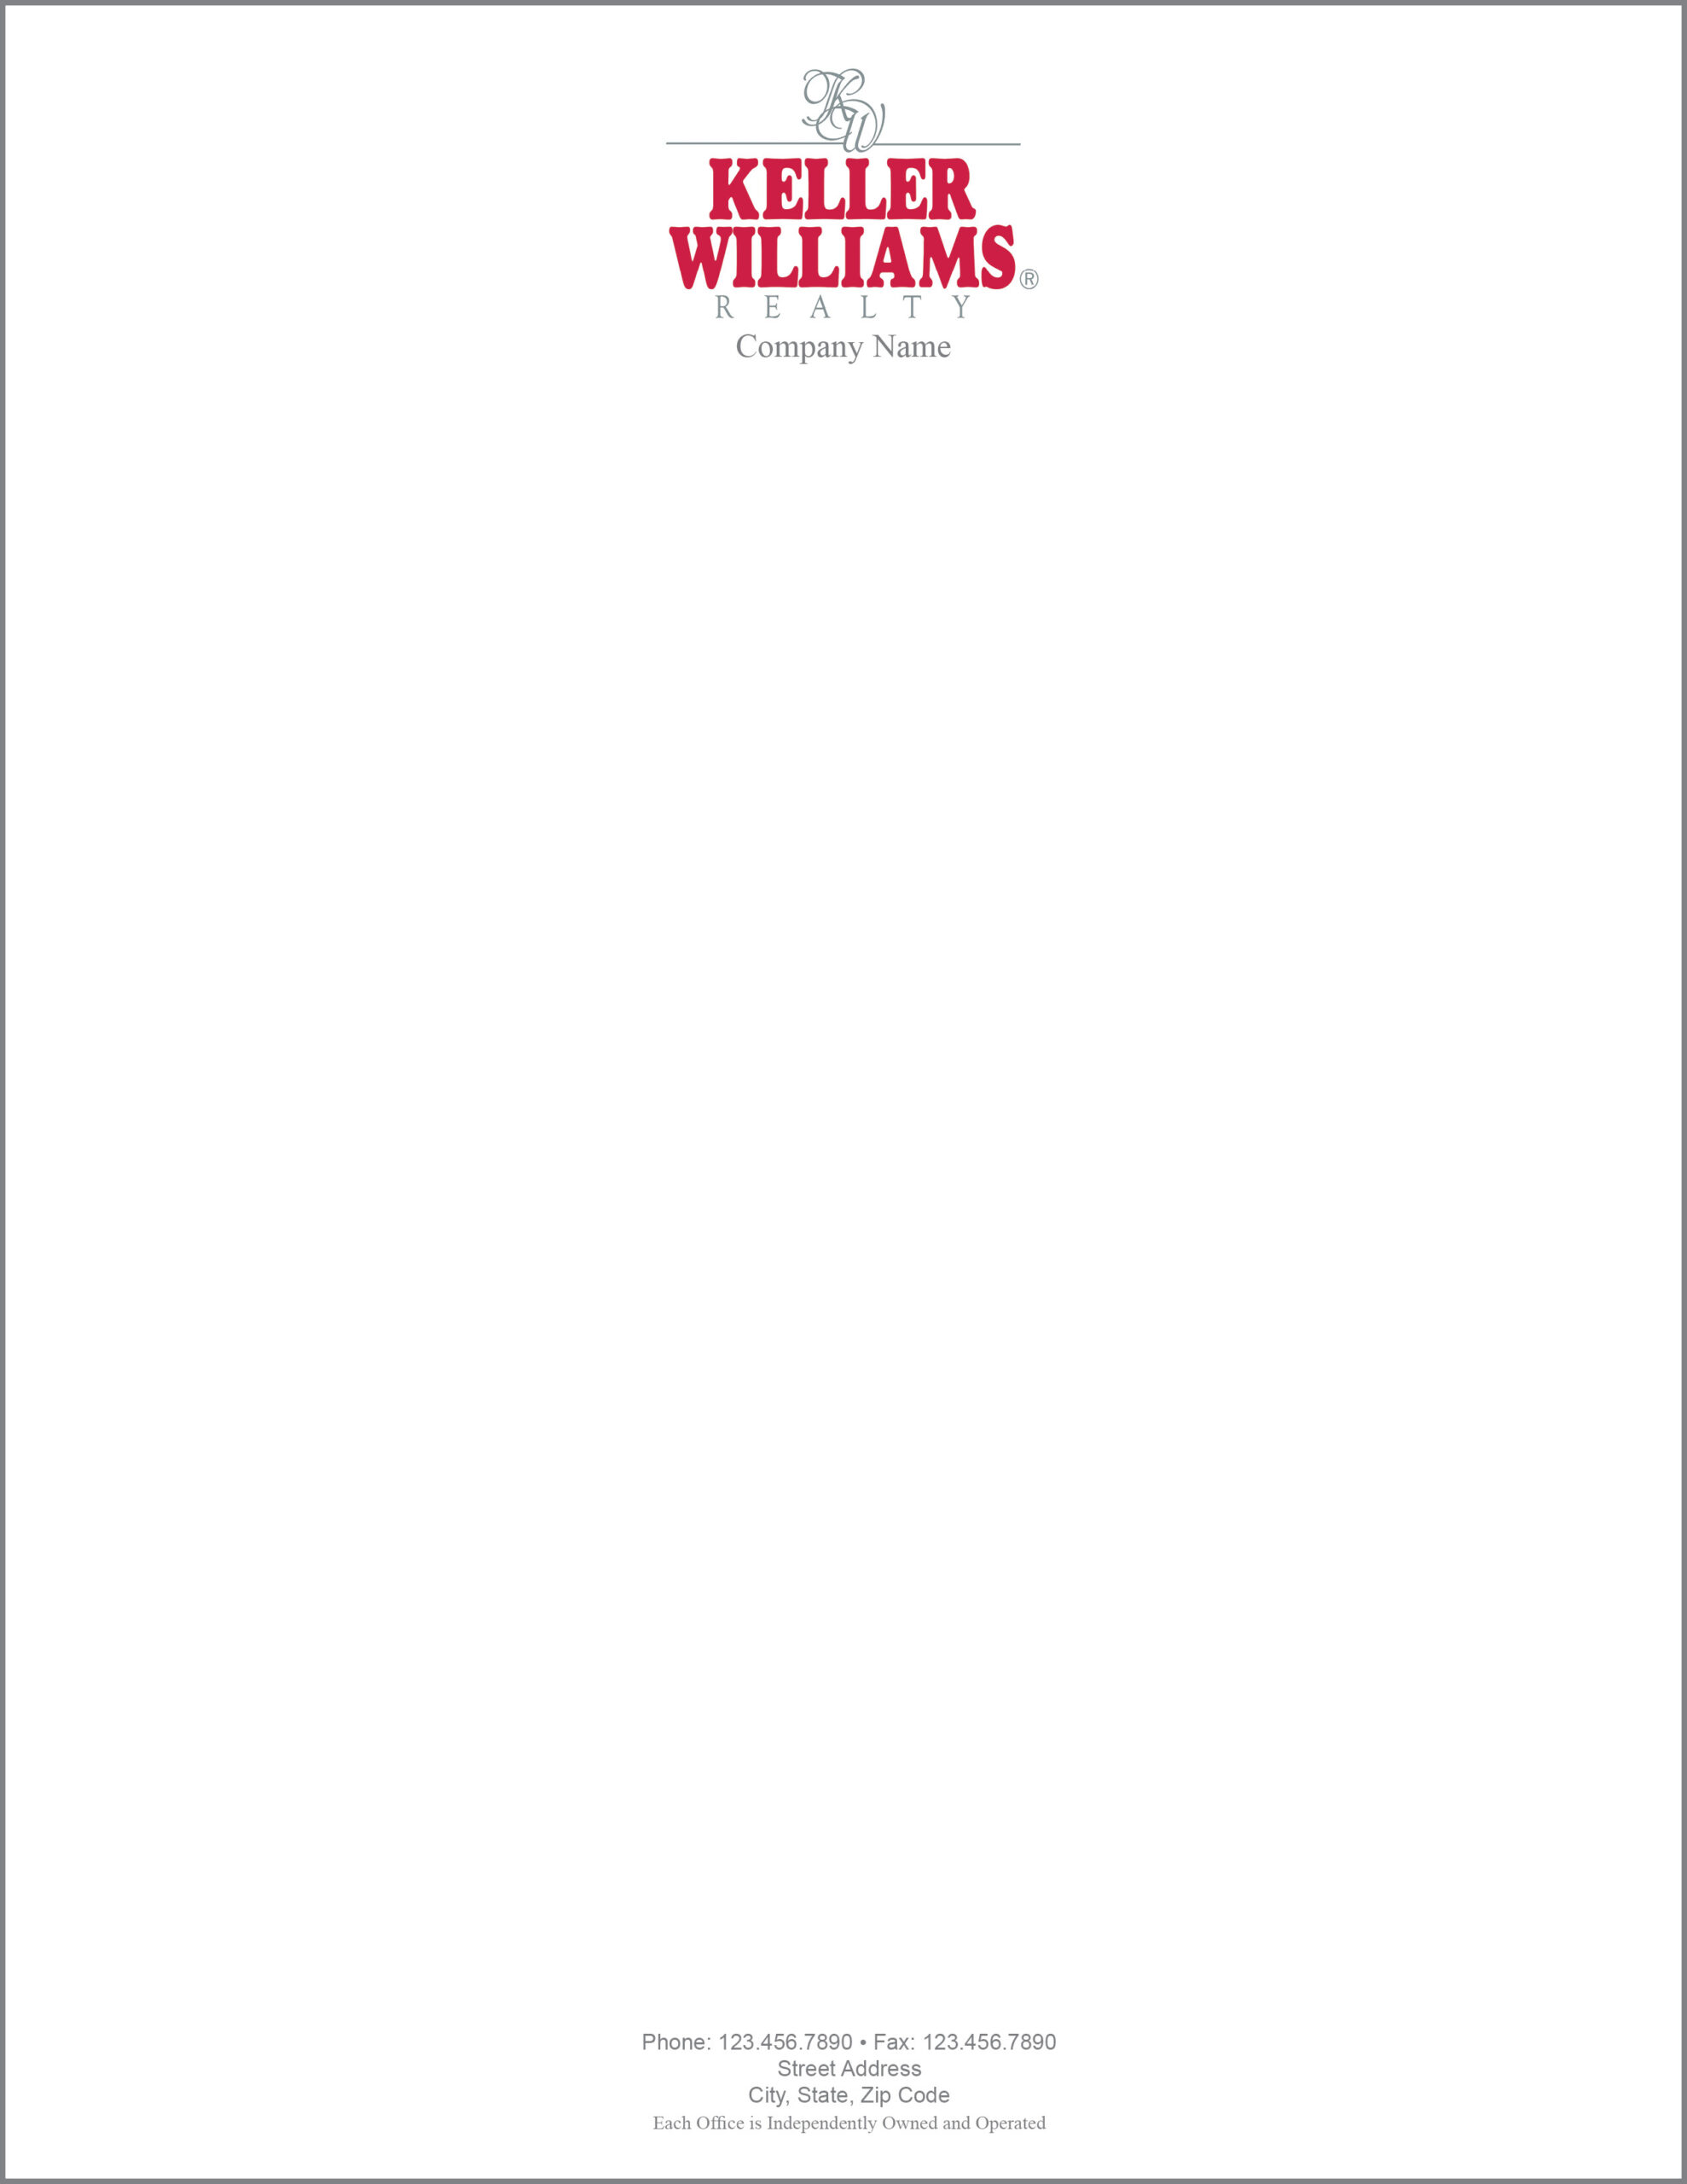 Letterhead Examples With Logos In Keller Williams Letterhead Templates